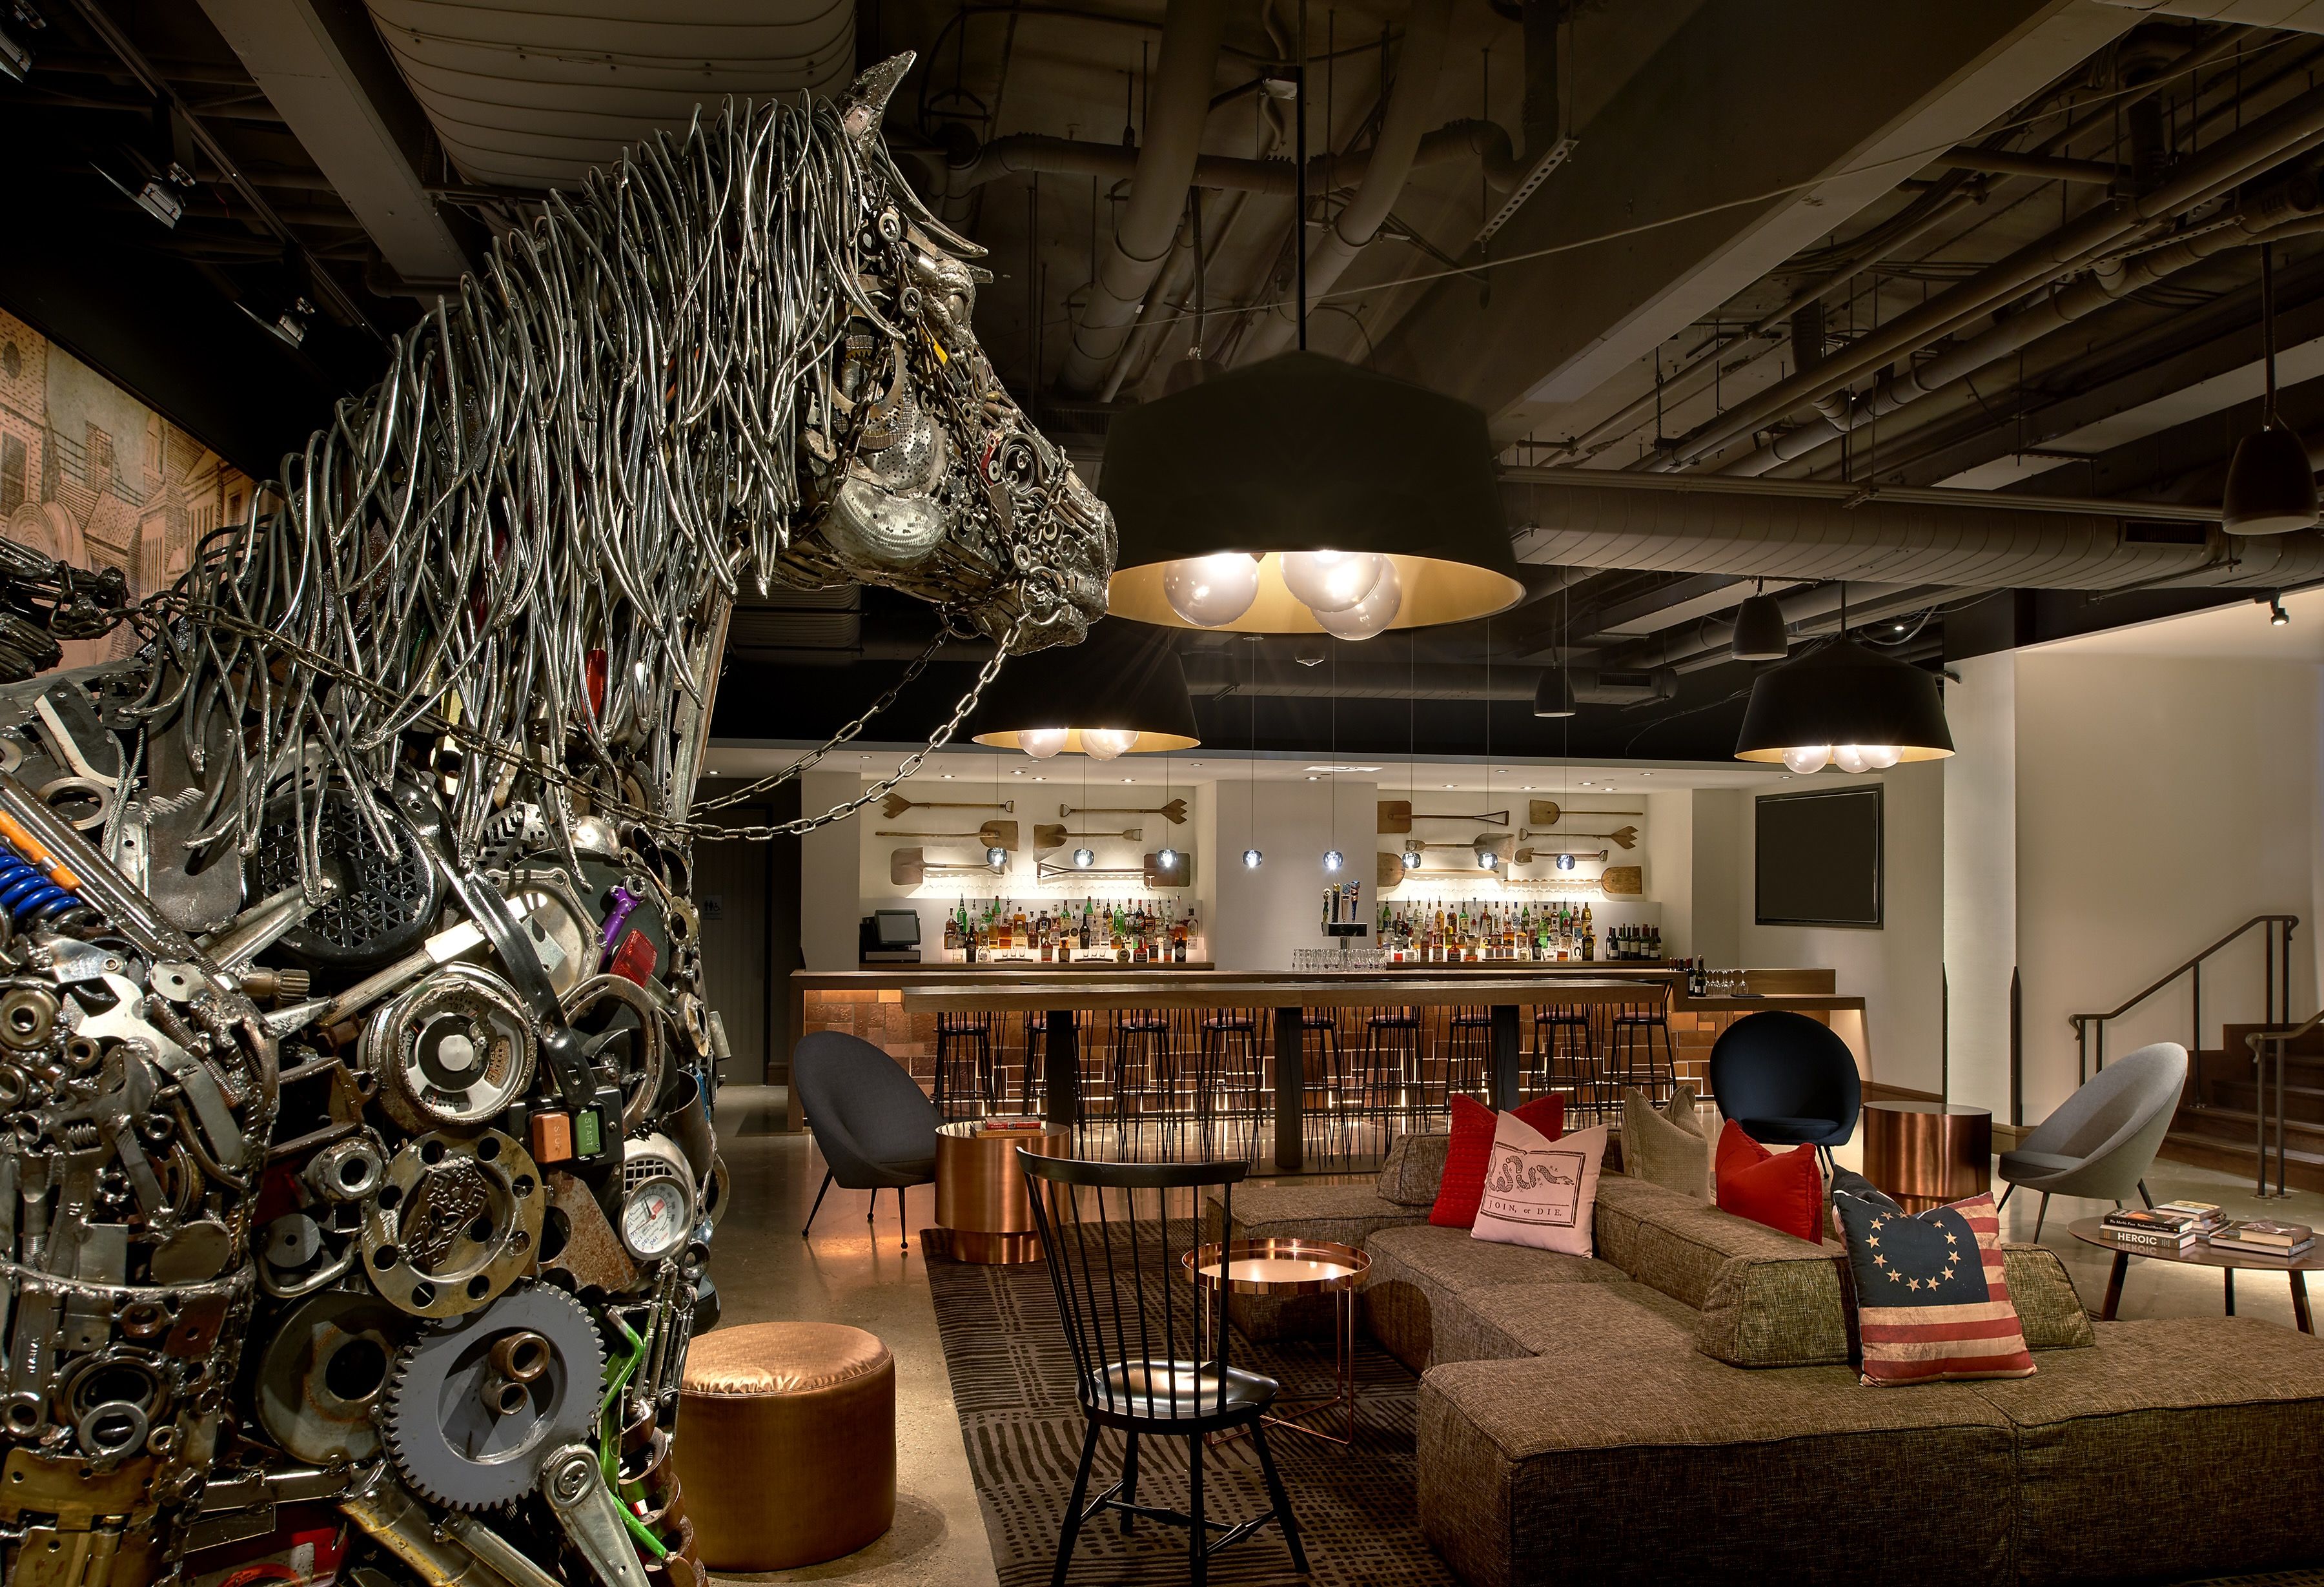 Boston revere hotel lobby with horse statue